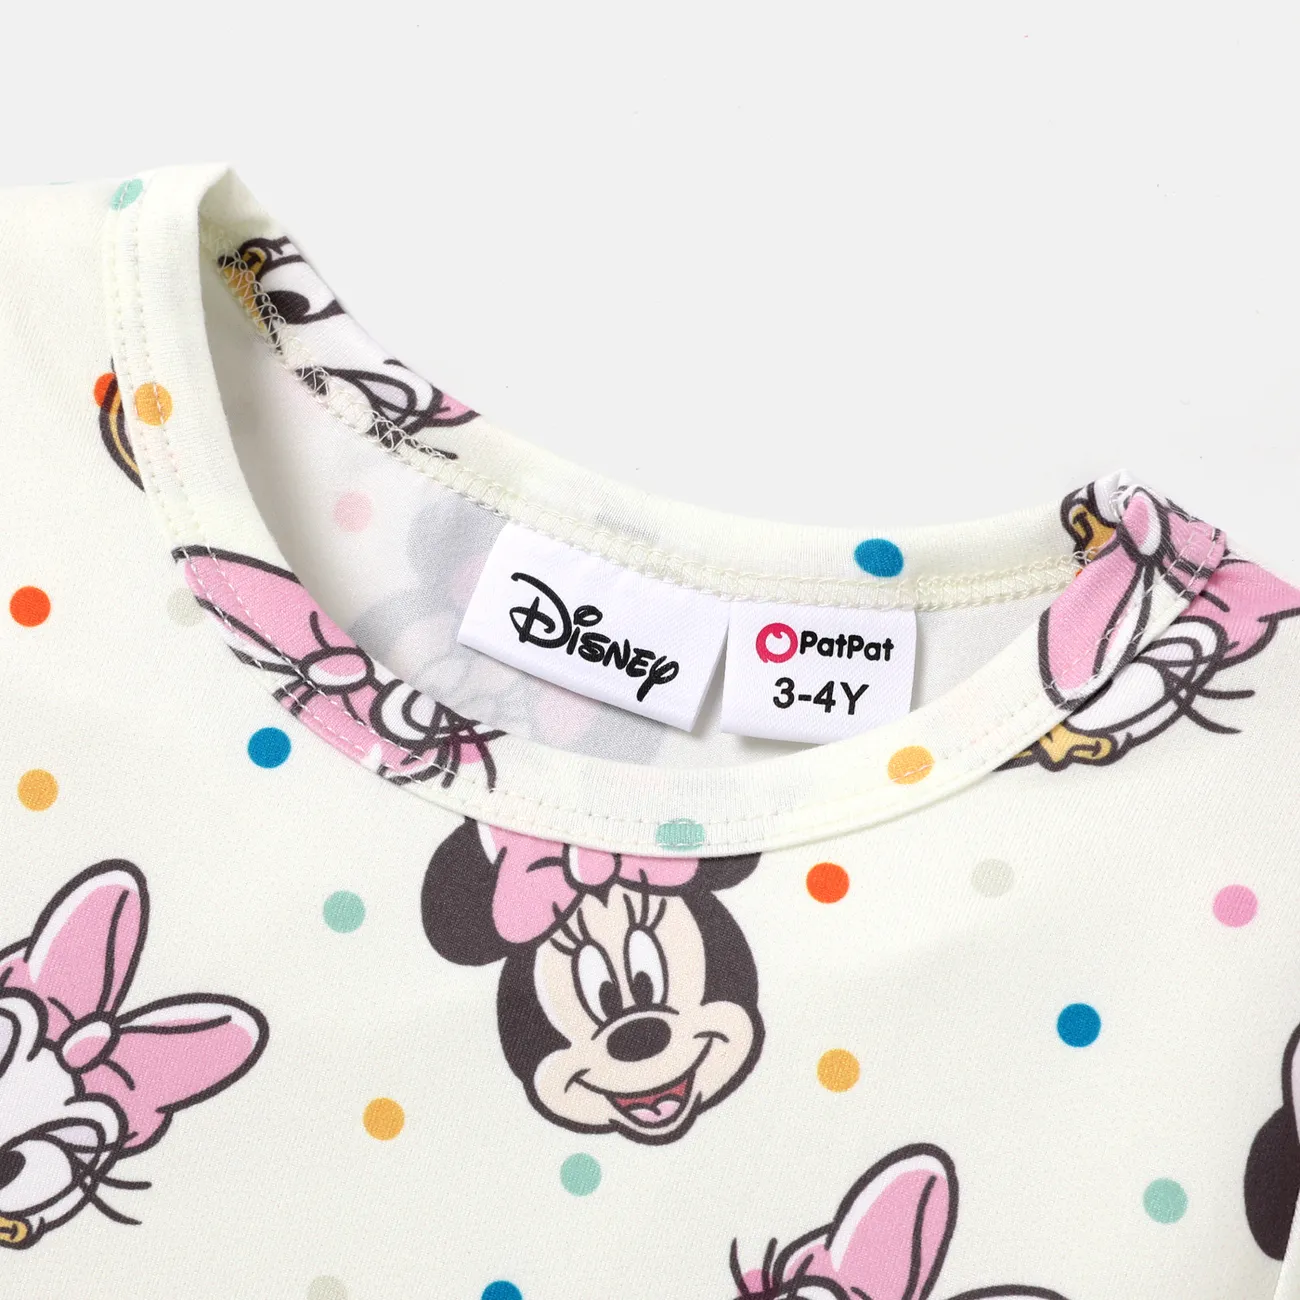 Disney Mickey and Friends Toddler Girl Polka Dot/Stripe Digital Print Dress Apricot big image 1